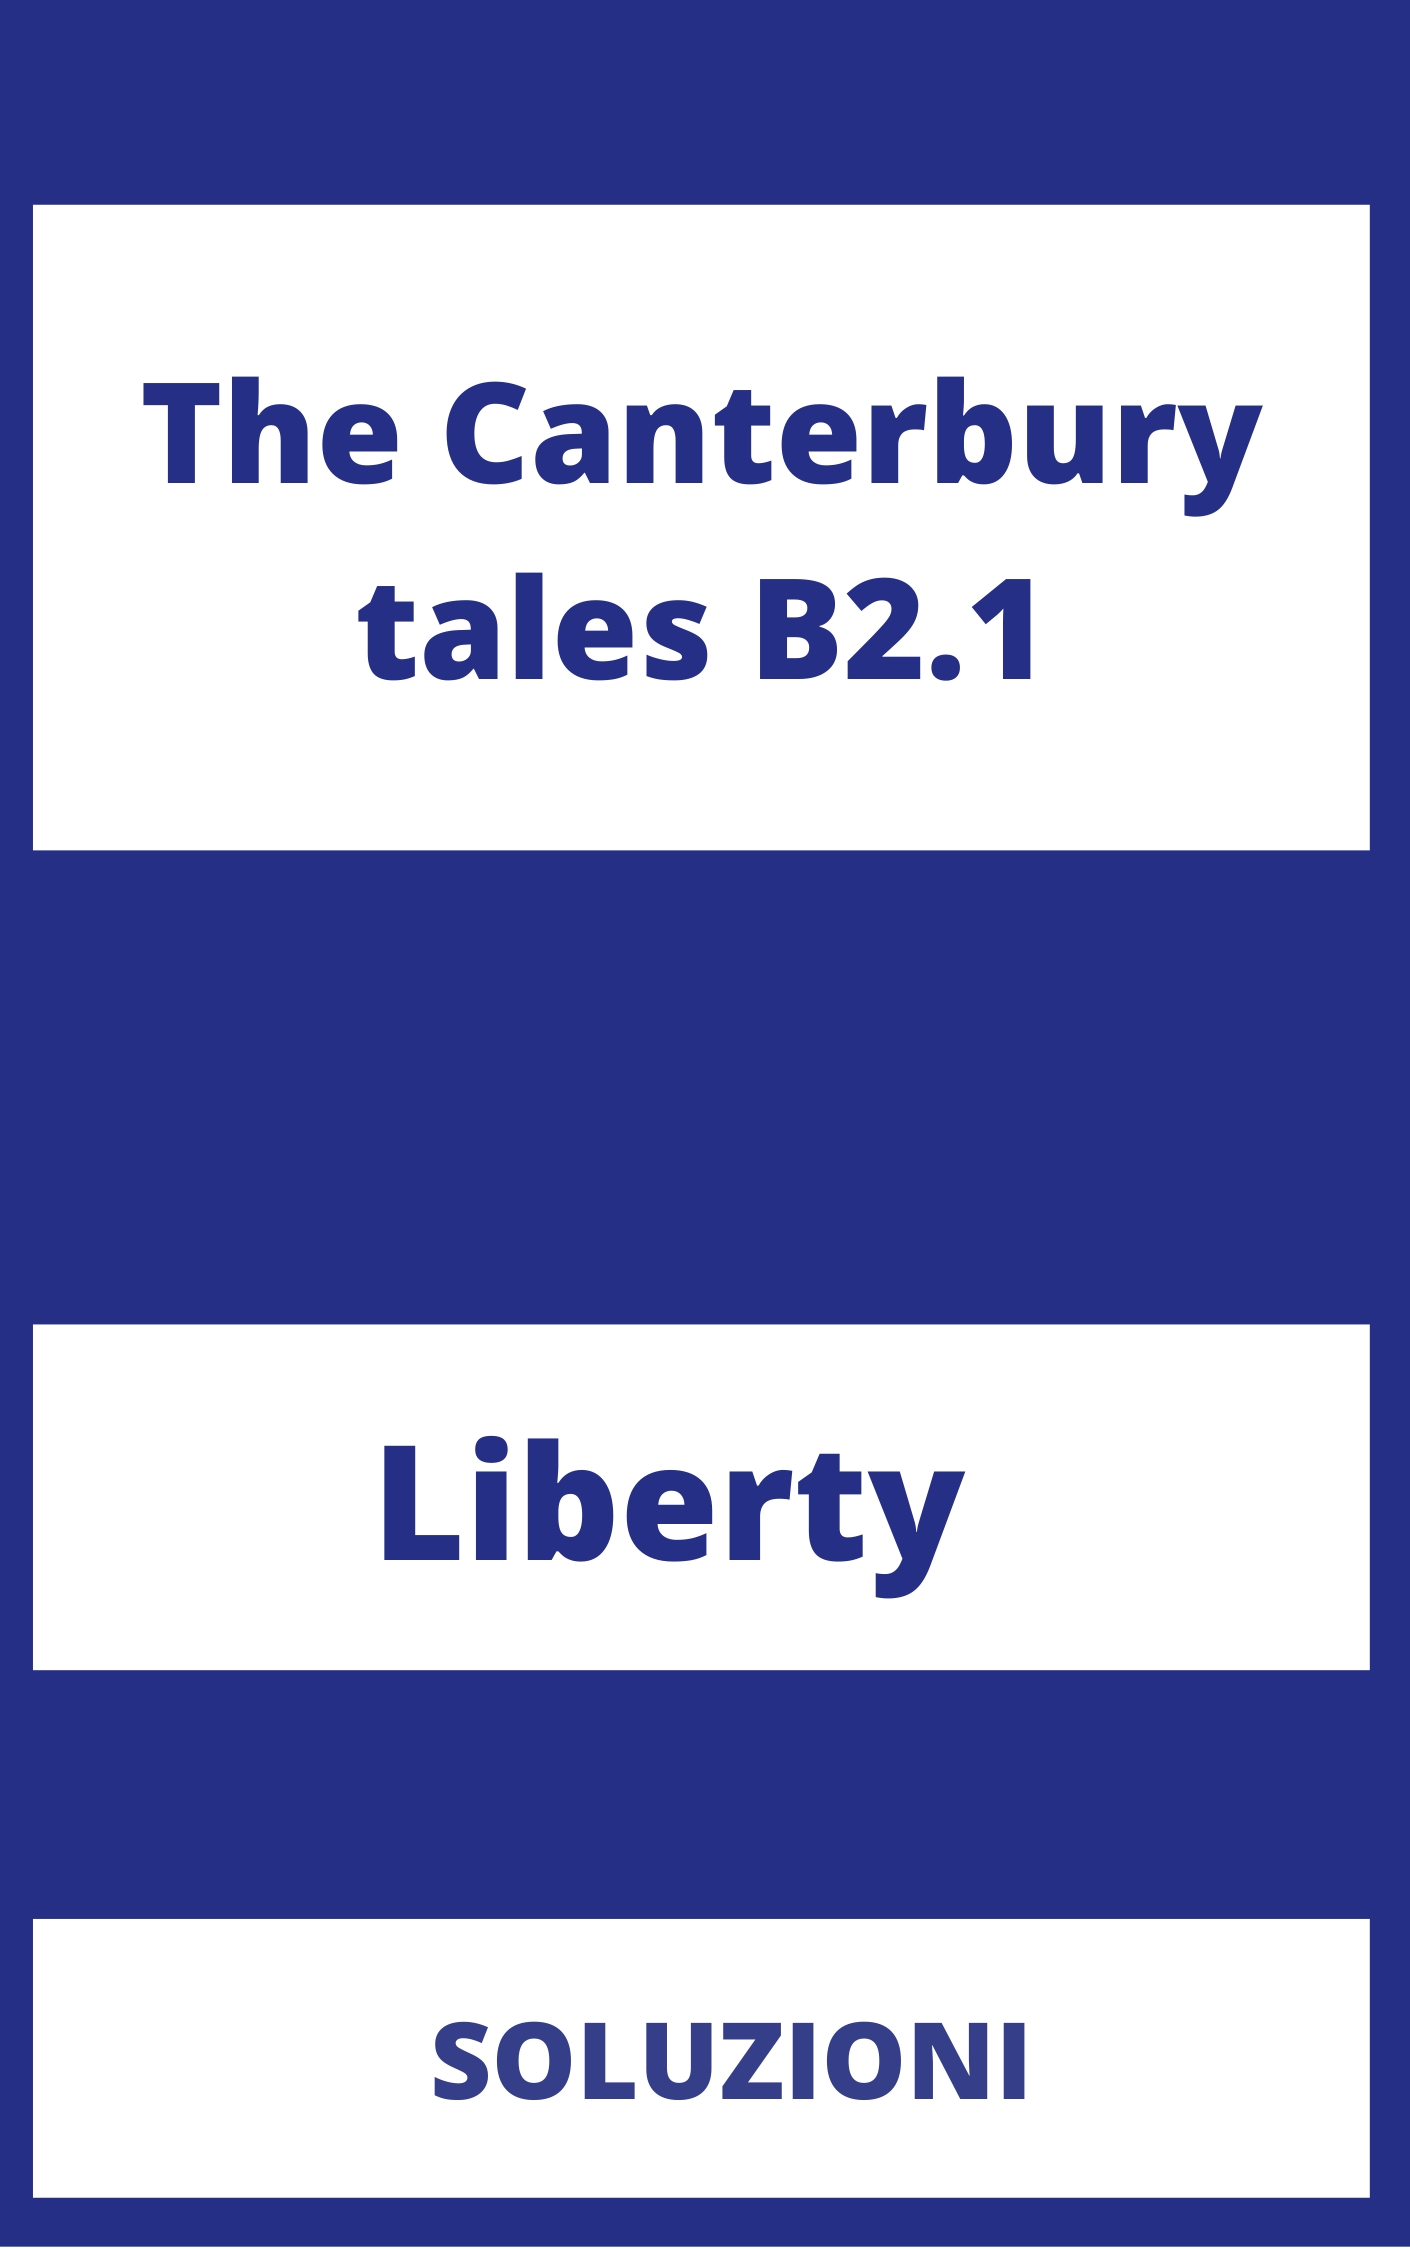 The Canterbury tales B2.1 Soluzioni